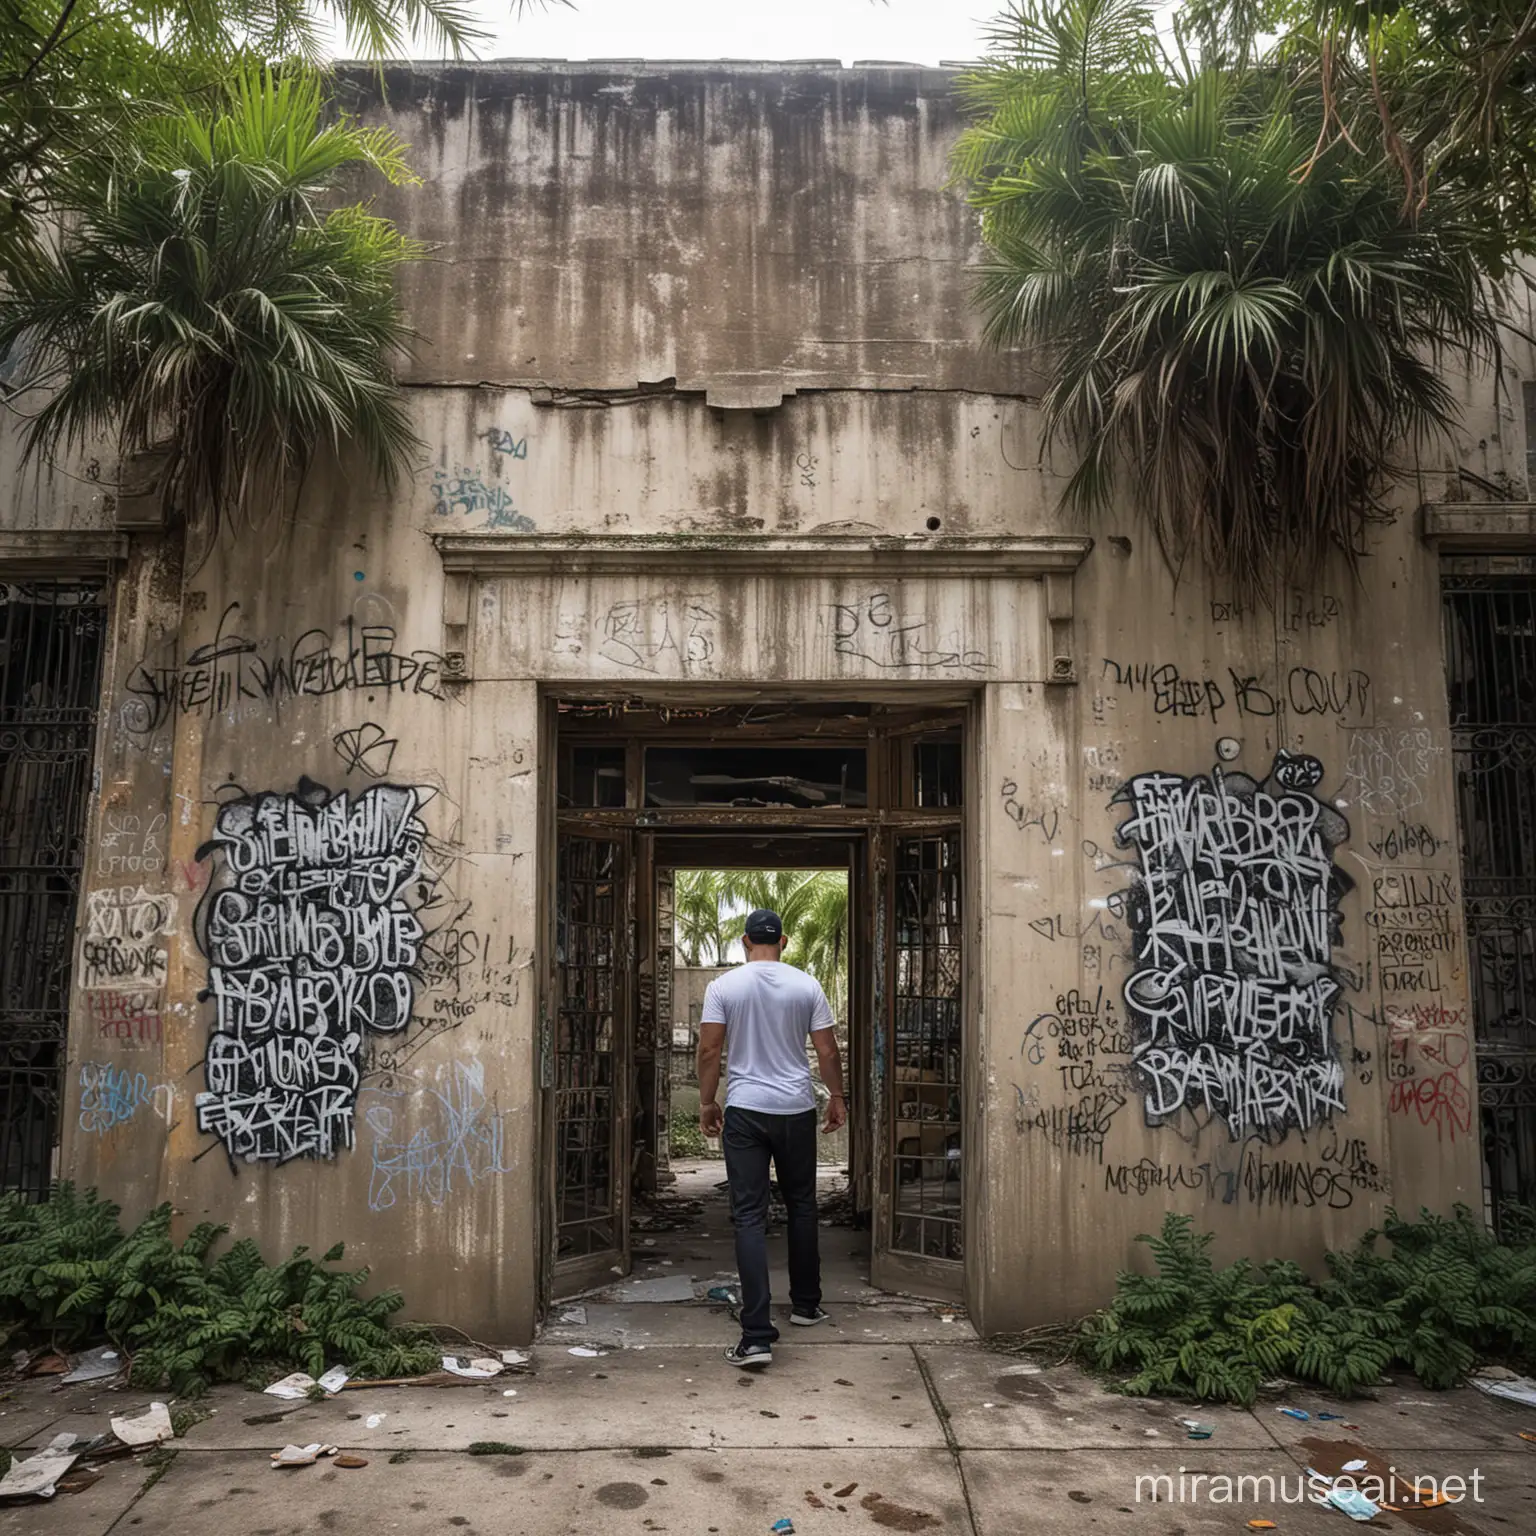 Exploring the Hidden Library Urban Decay and Dark Energy in Miami Florida